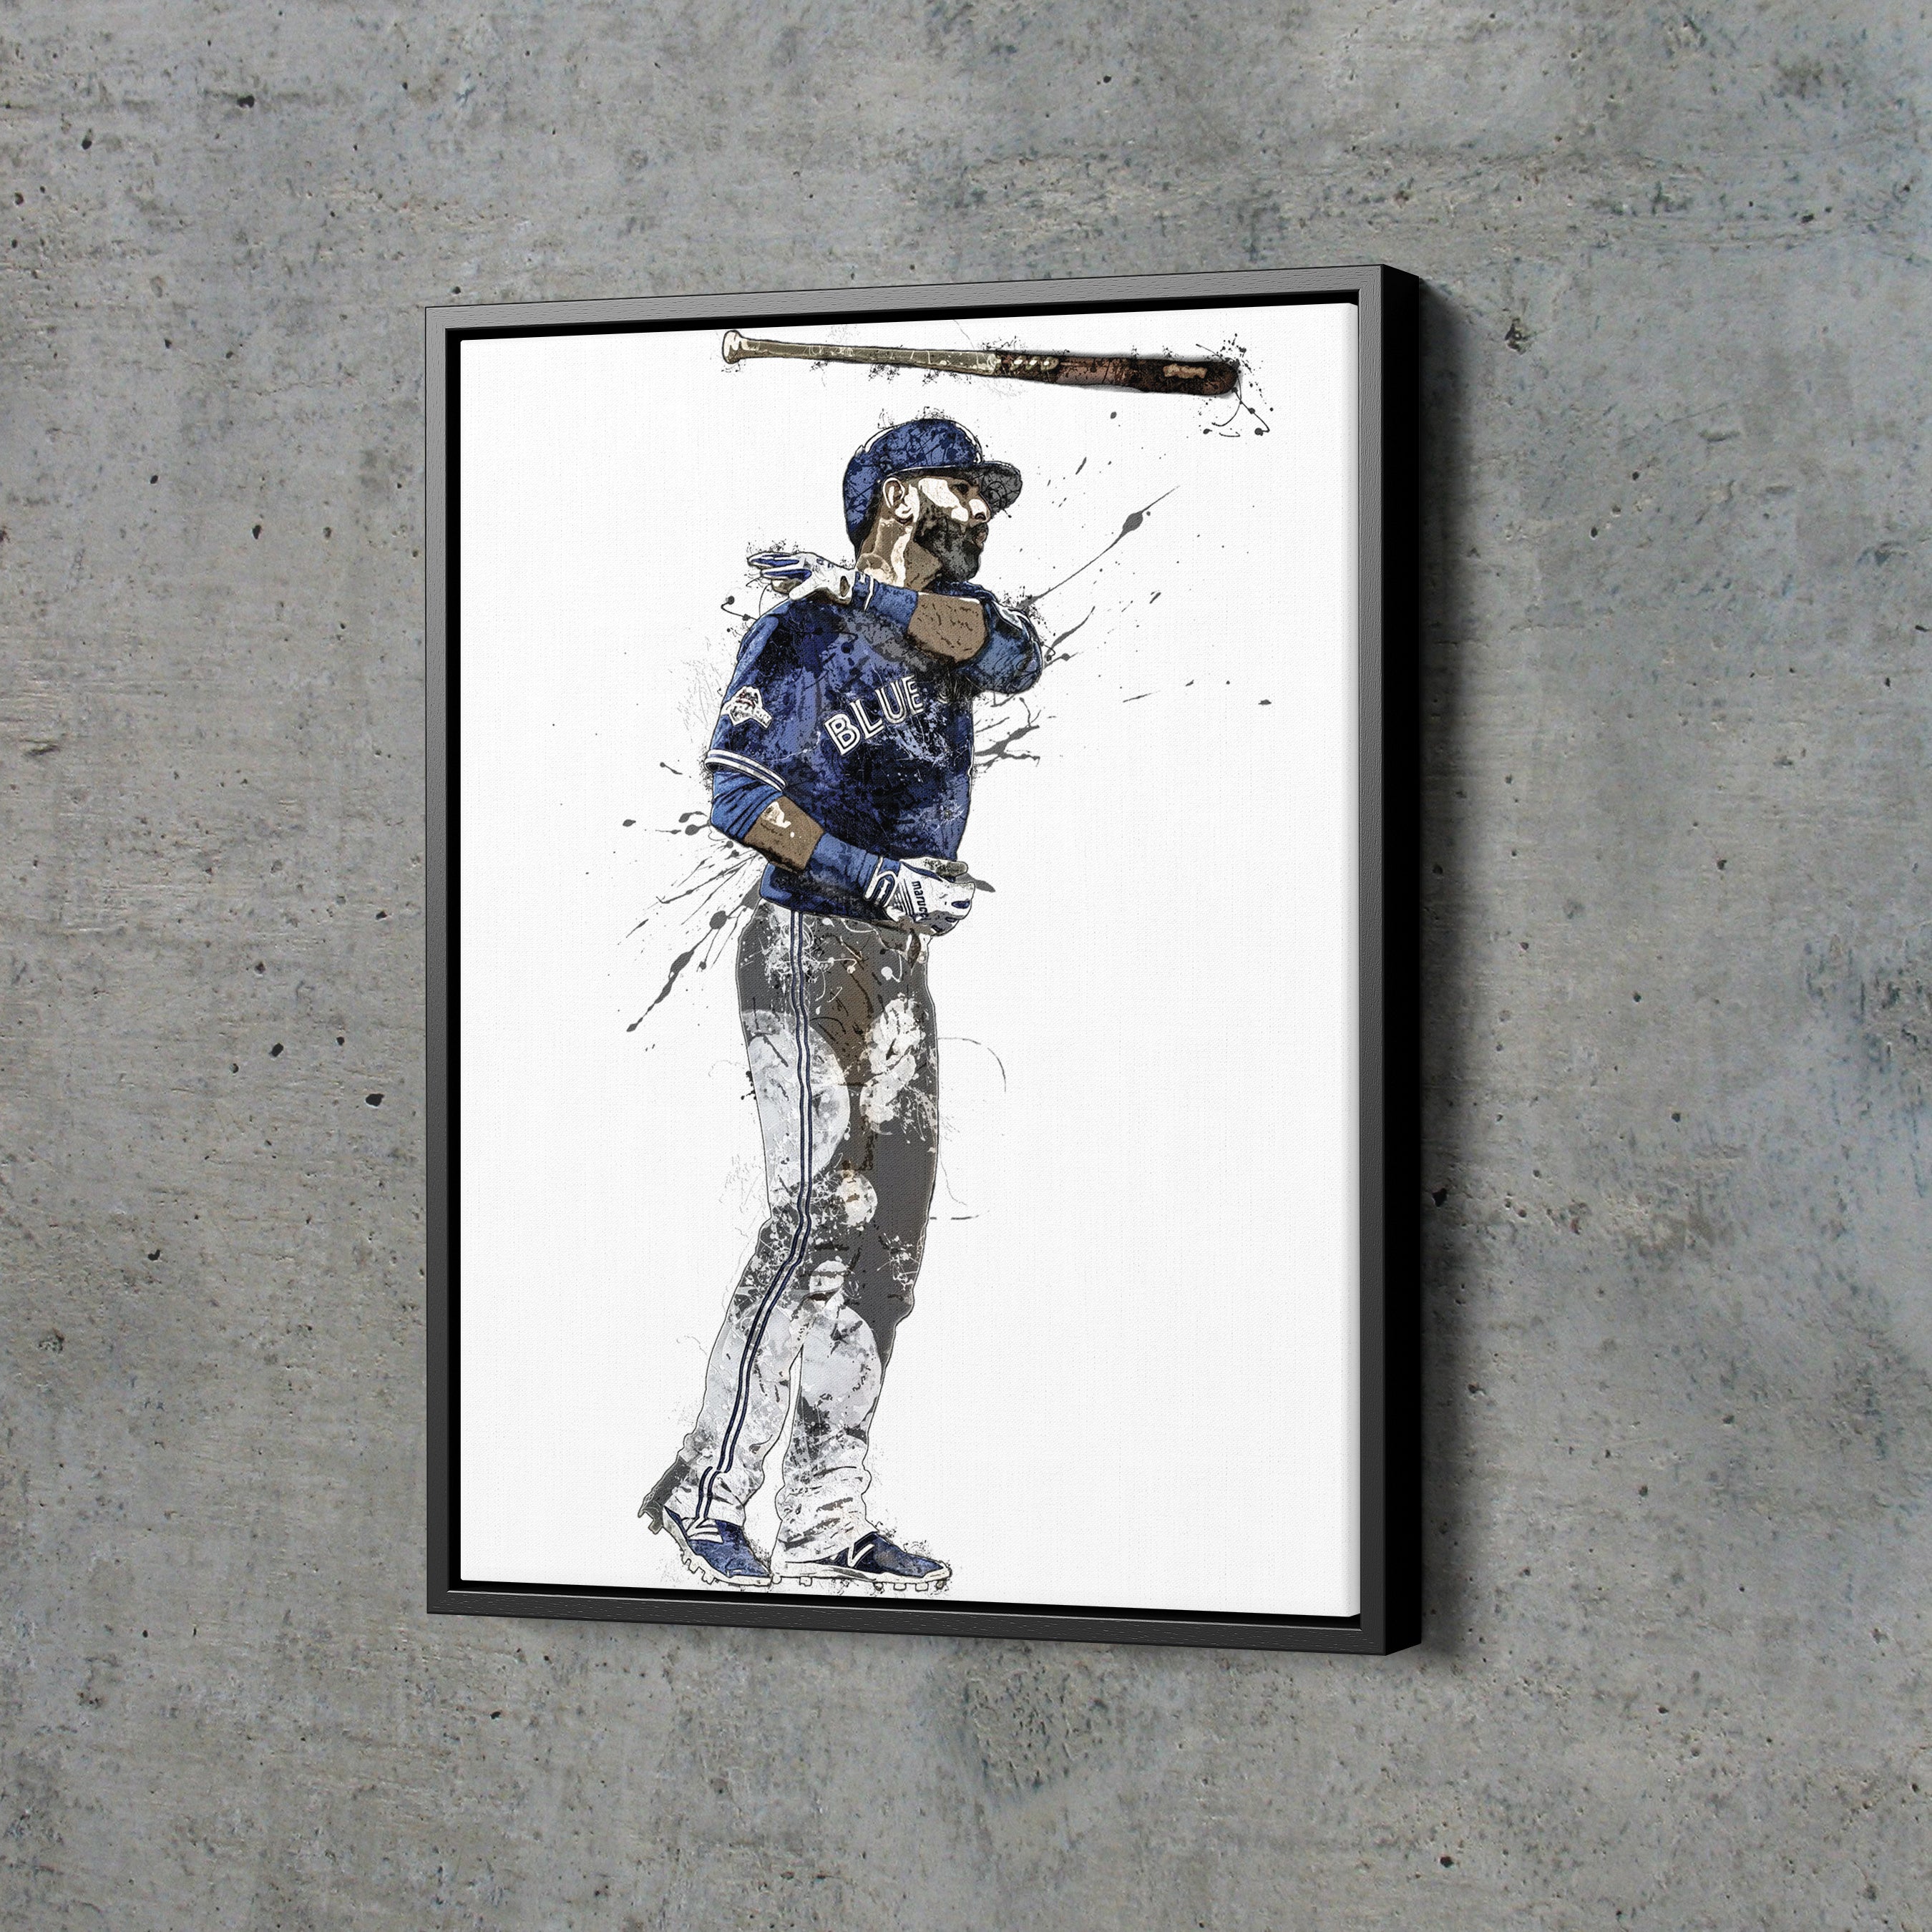 Jose Bautista Bat Flip Toronto Blue Jays  Baseball players, Baseball,  Baseball art